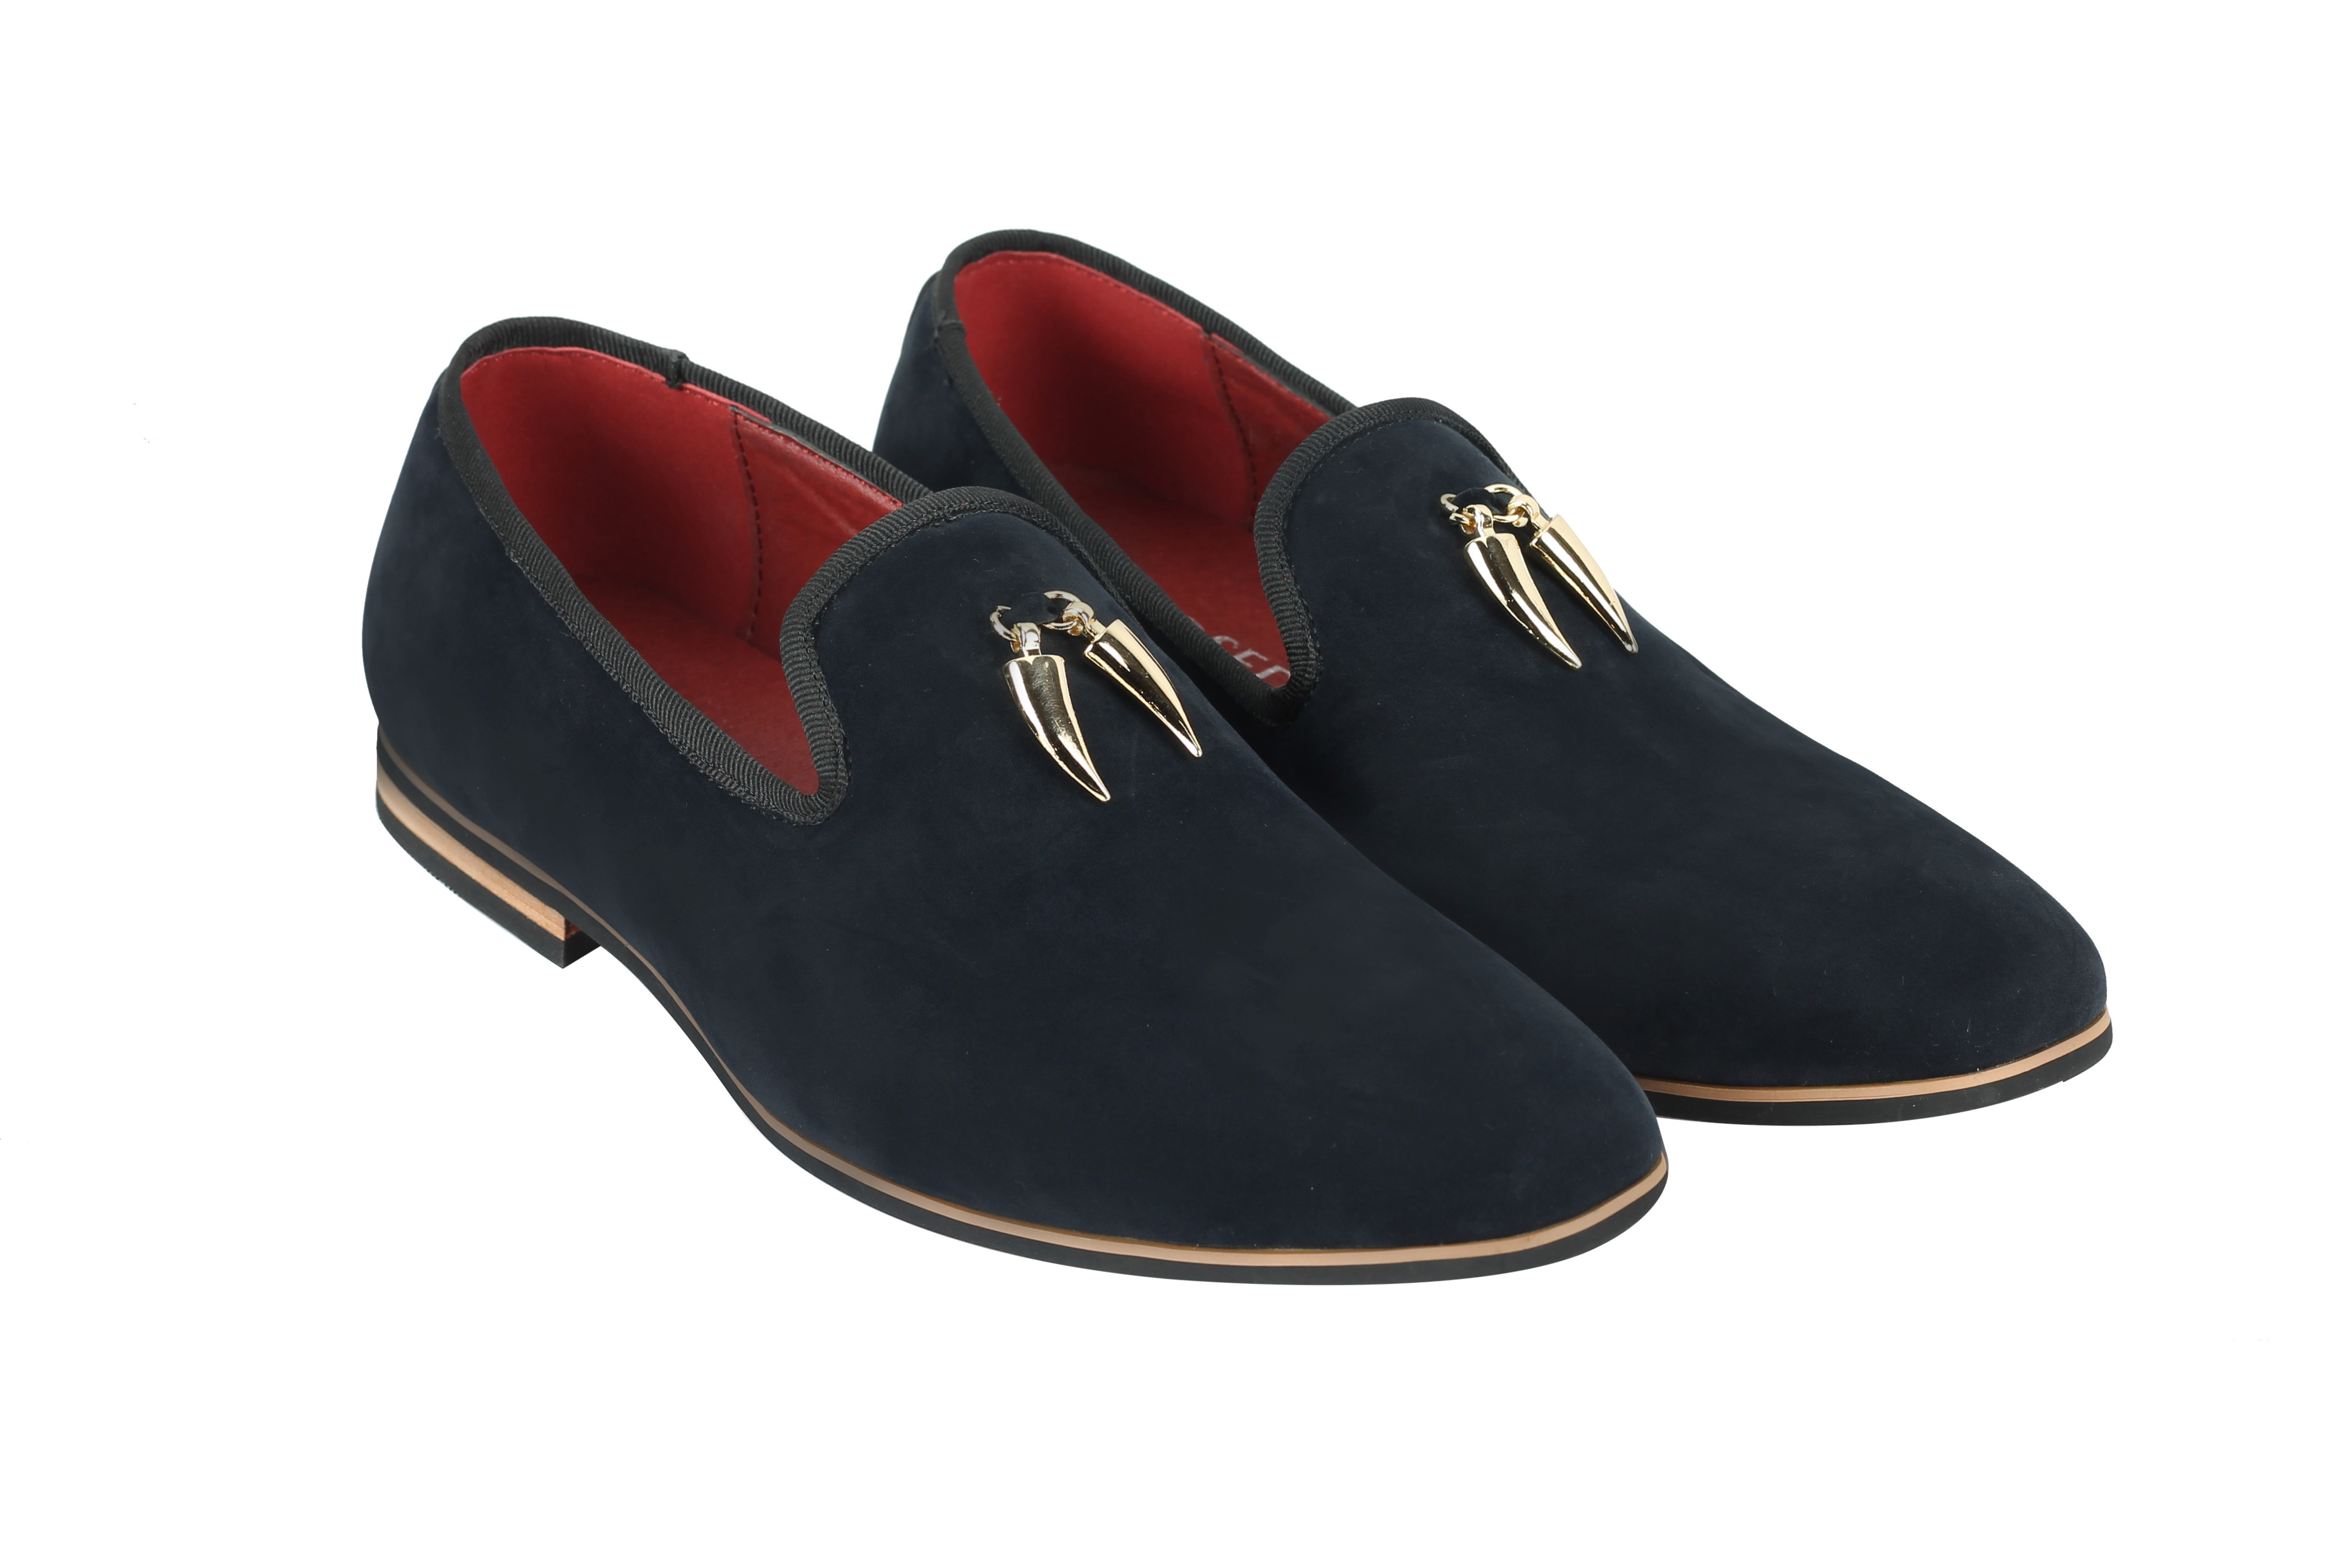 Mens Tassel Shoes Fashion New Mens Shoes Loafers Retro suya Brand Mens Shoes Gold 8.5 M US